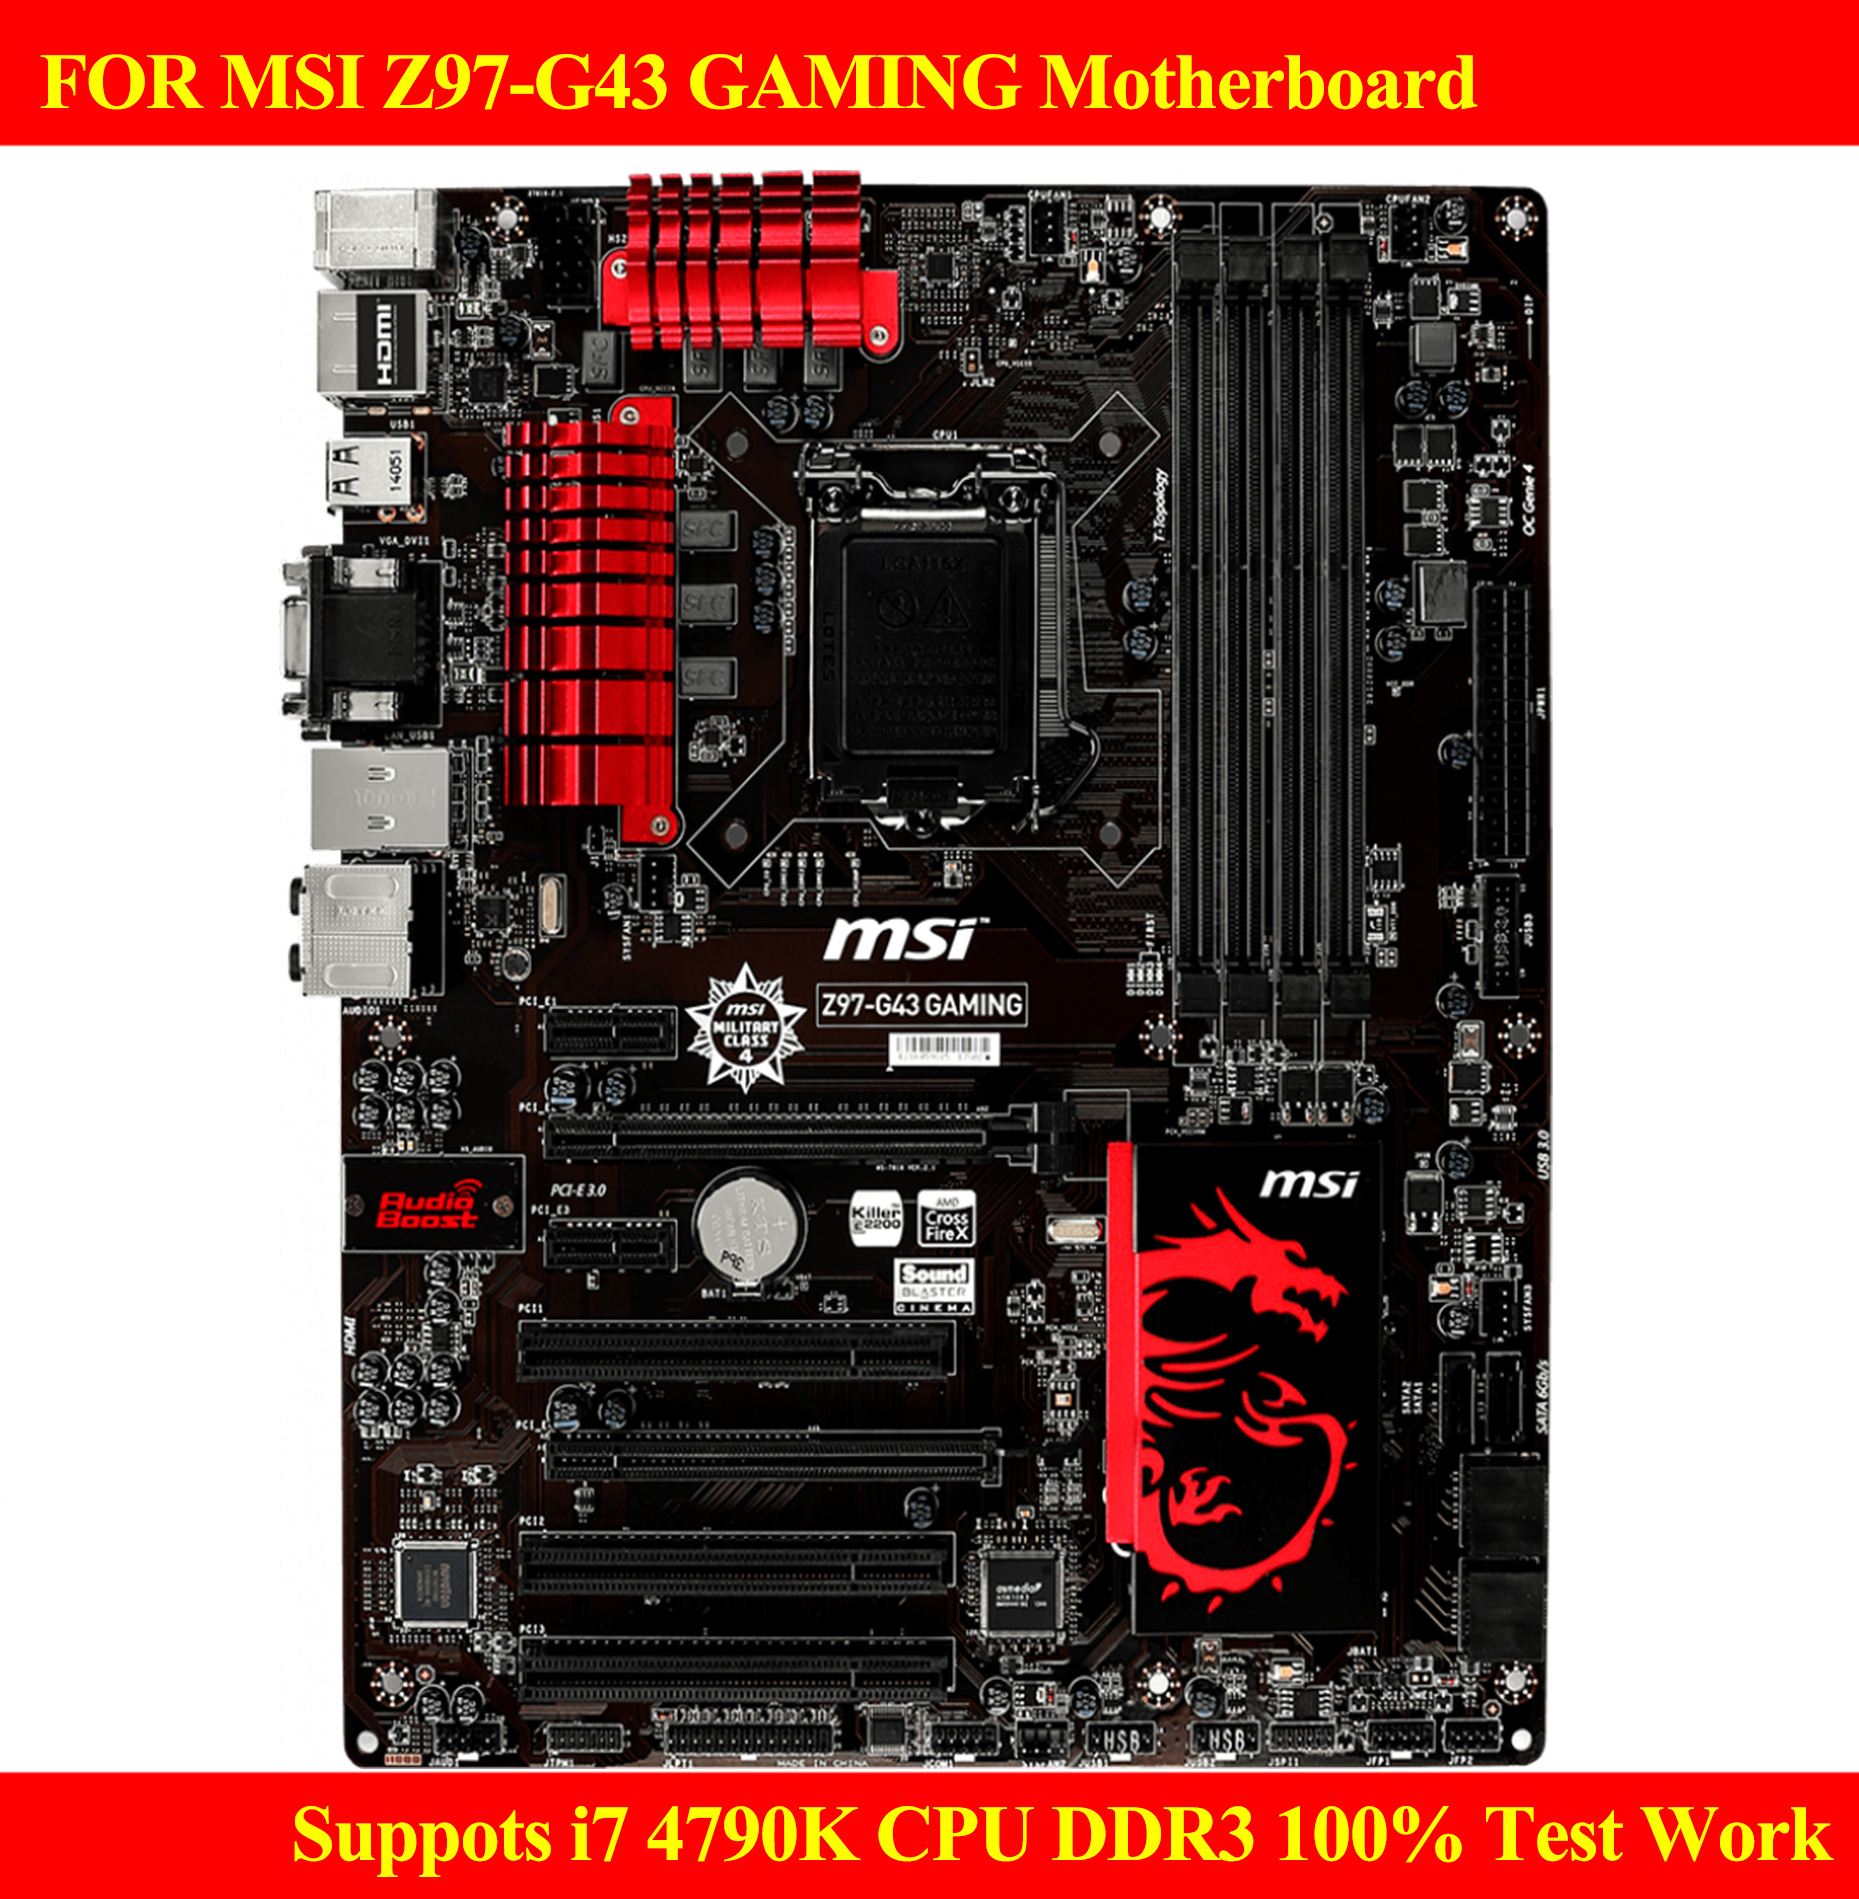 I7 4790K Gaming Motherboard / Motherboard Cpu Combo » I7 4790k